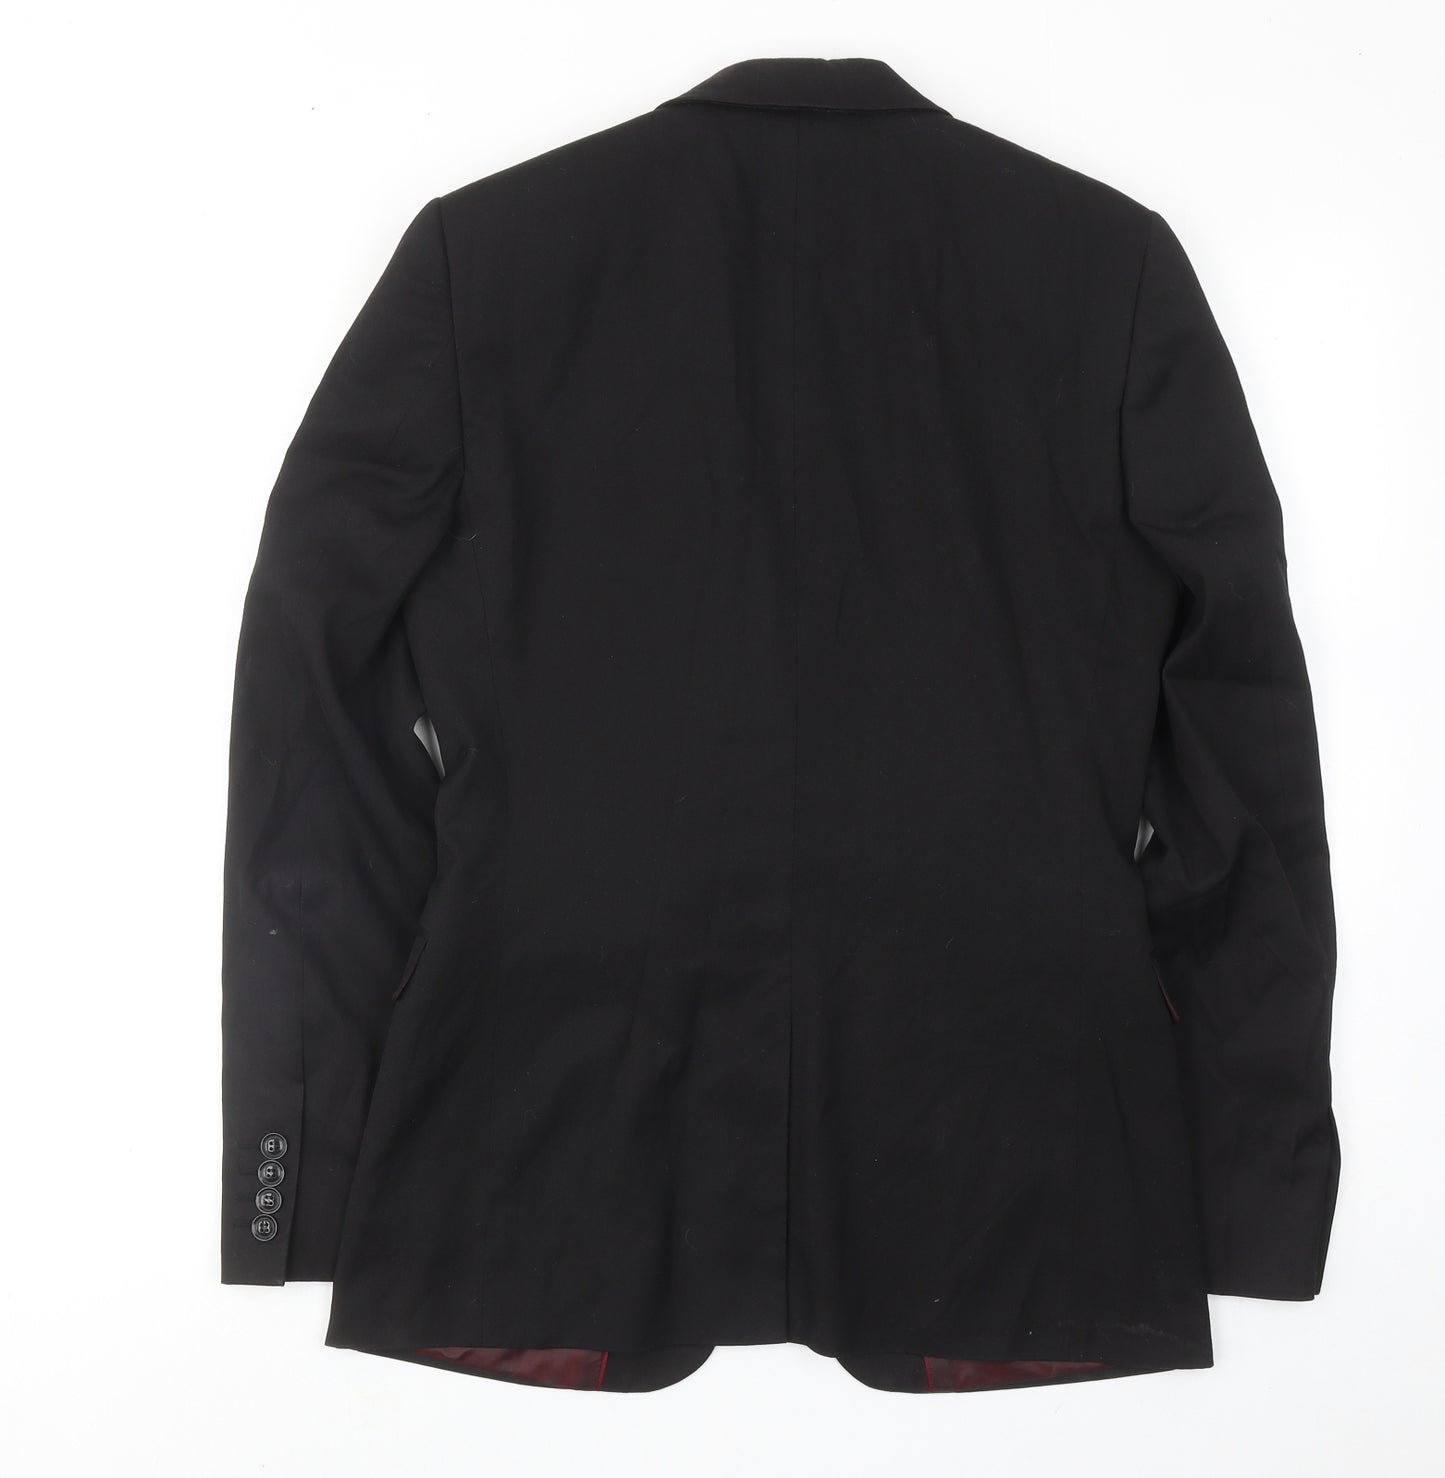 Topman Mens Black Polyester Jacket Suit Jacket Size 36 Regular